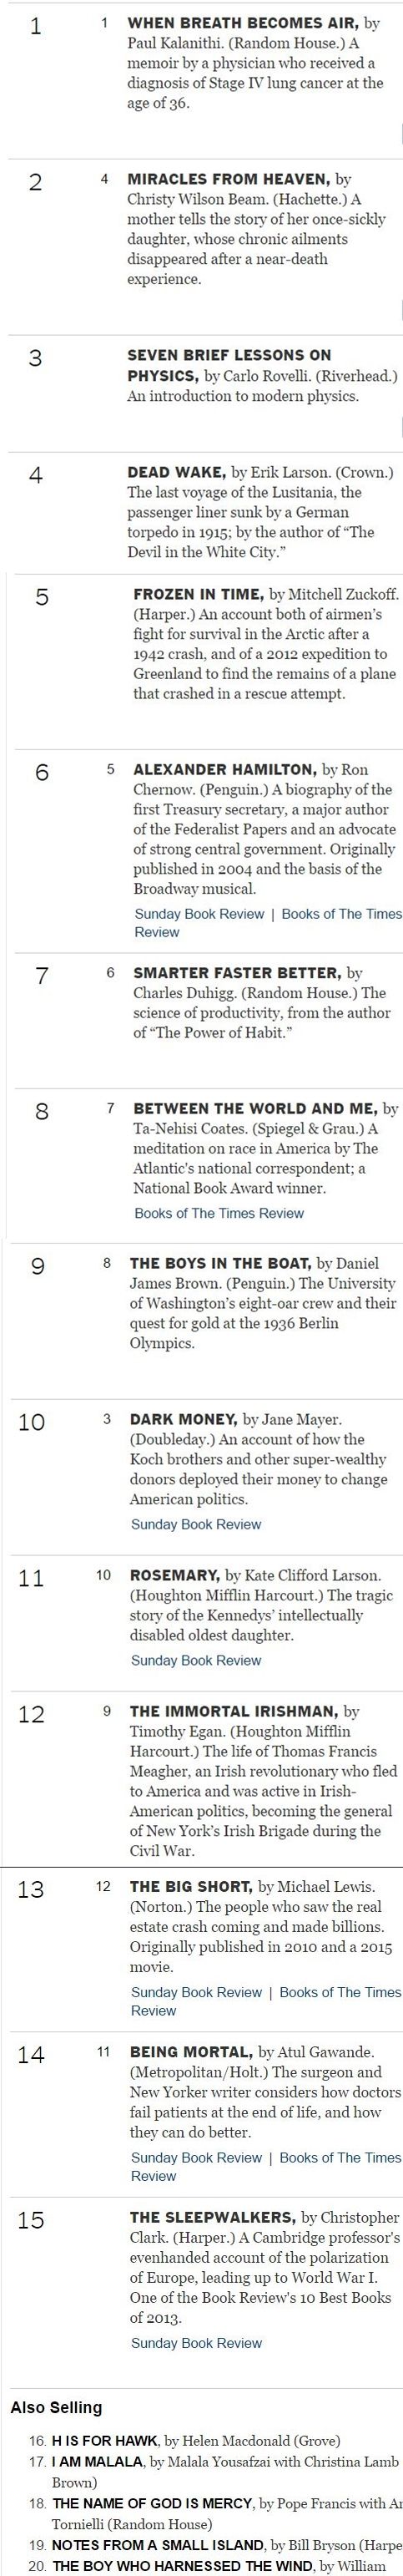 New York Times Best seller list April 3rd 2016 (Fiction ~ Non-Fiction)